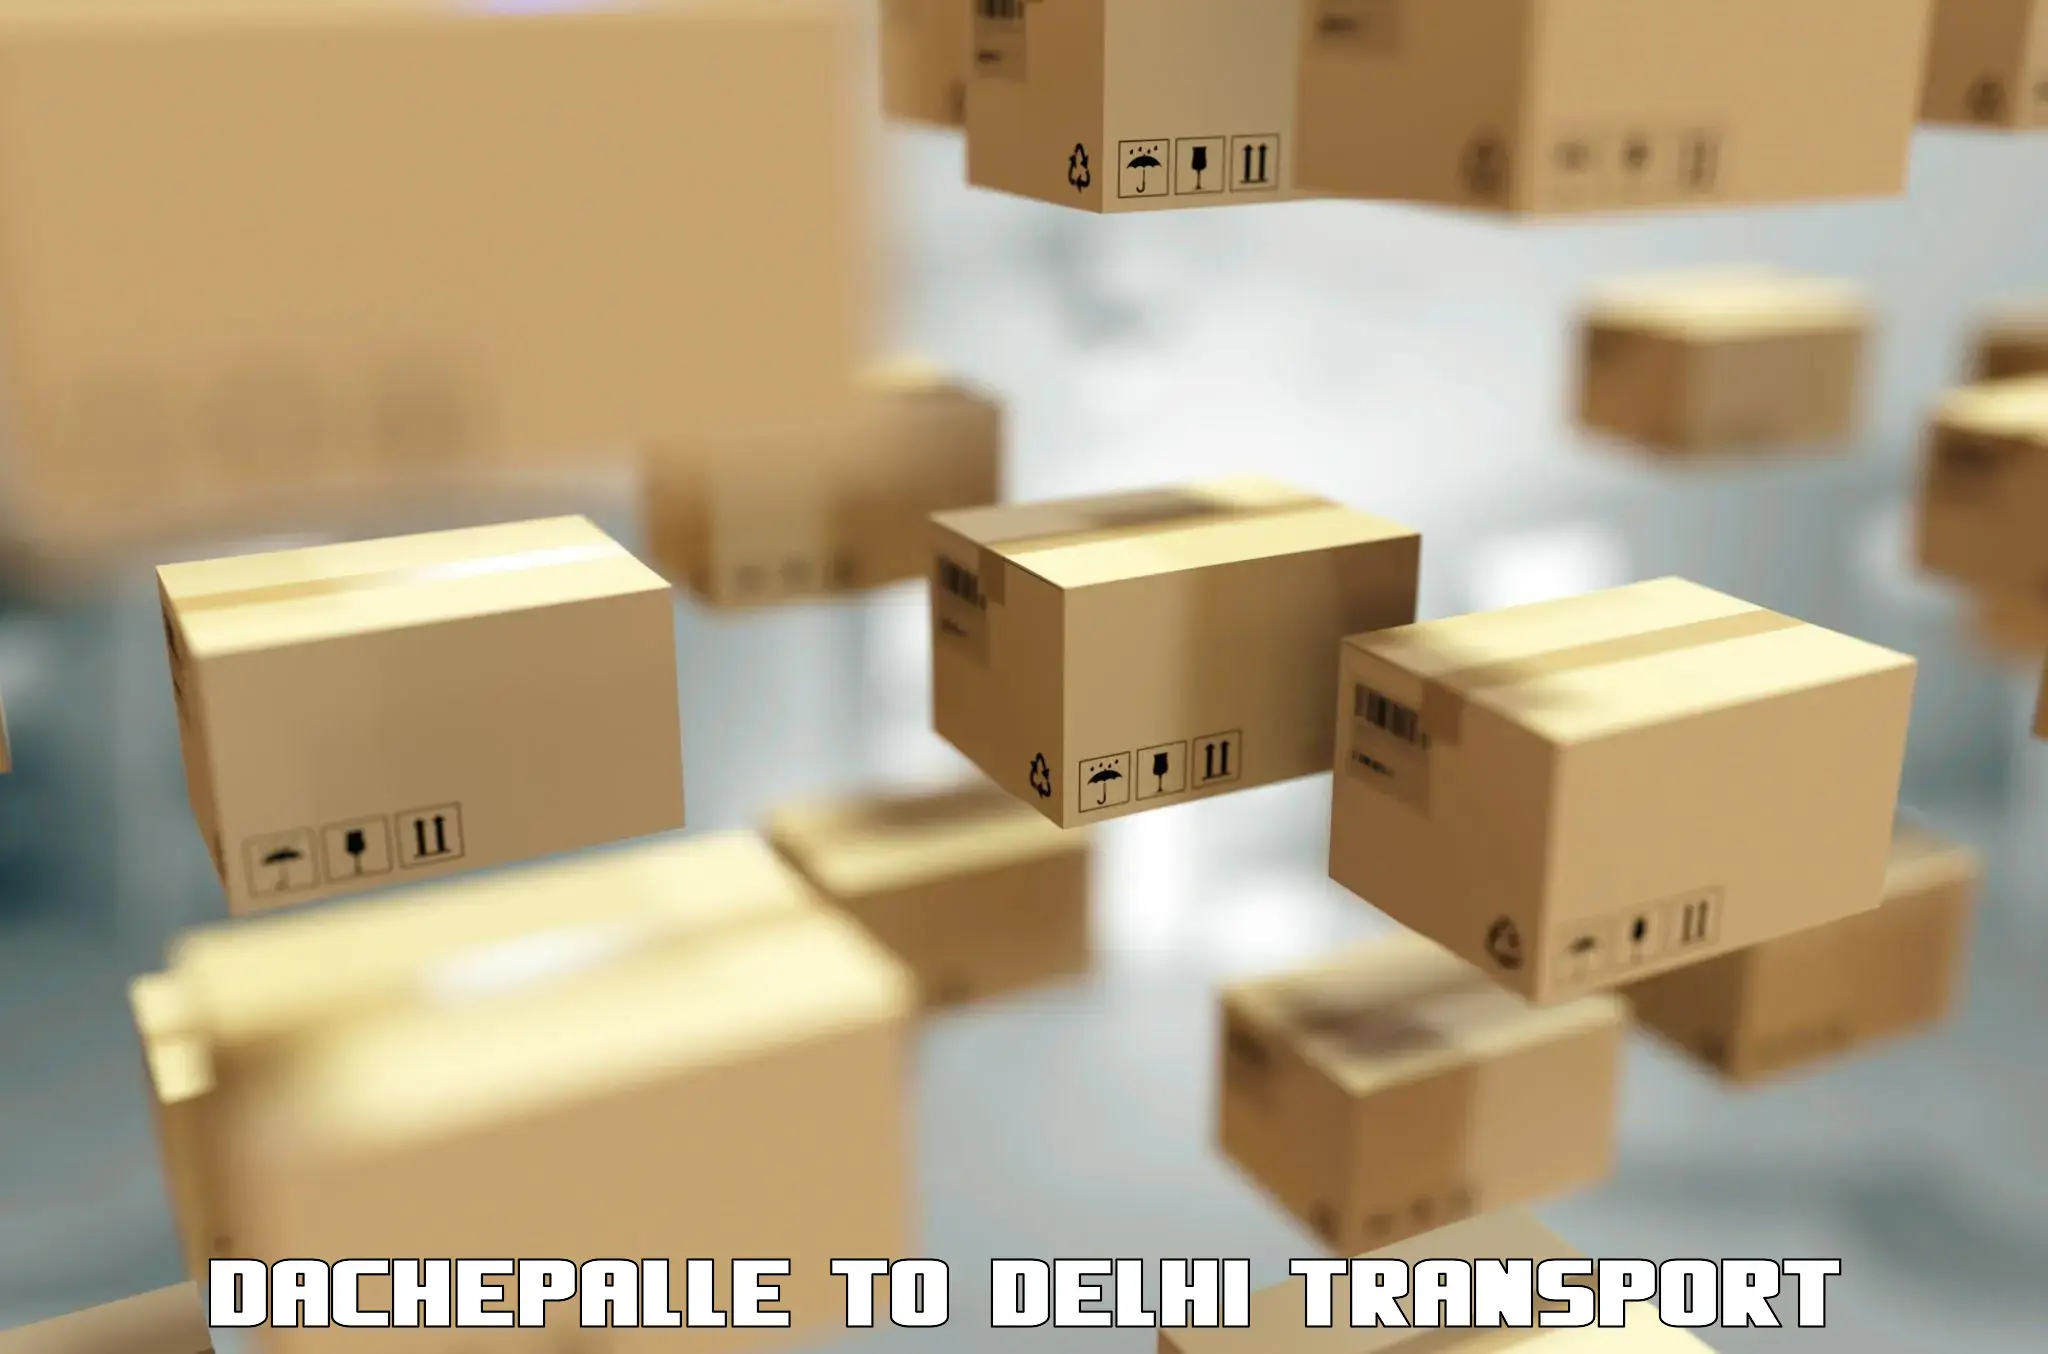 Cycle transportation service Dachepalle to Delhi